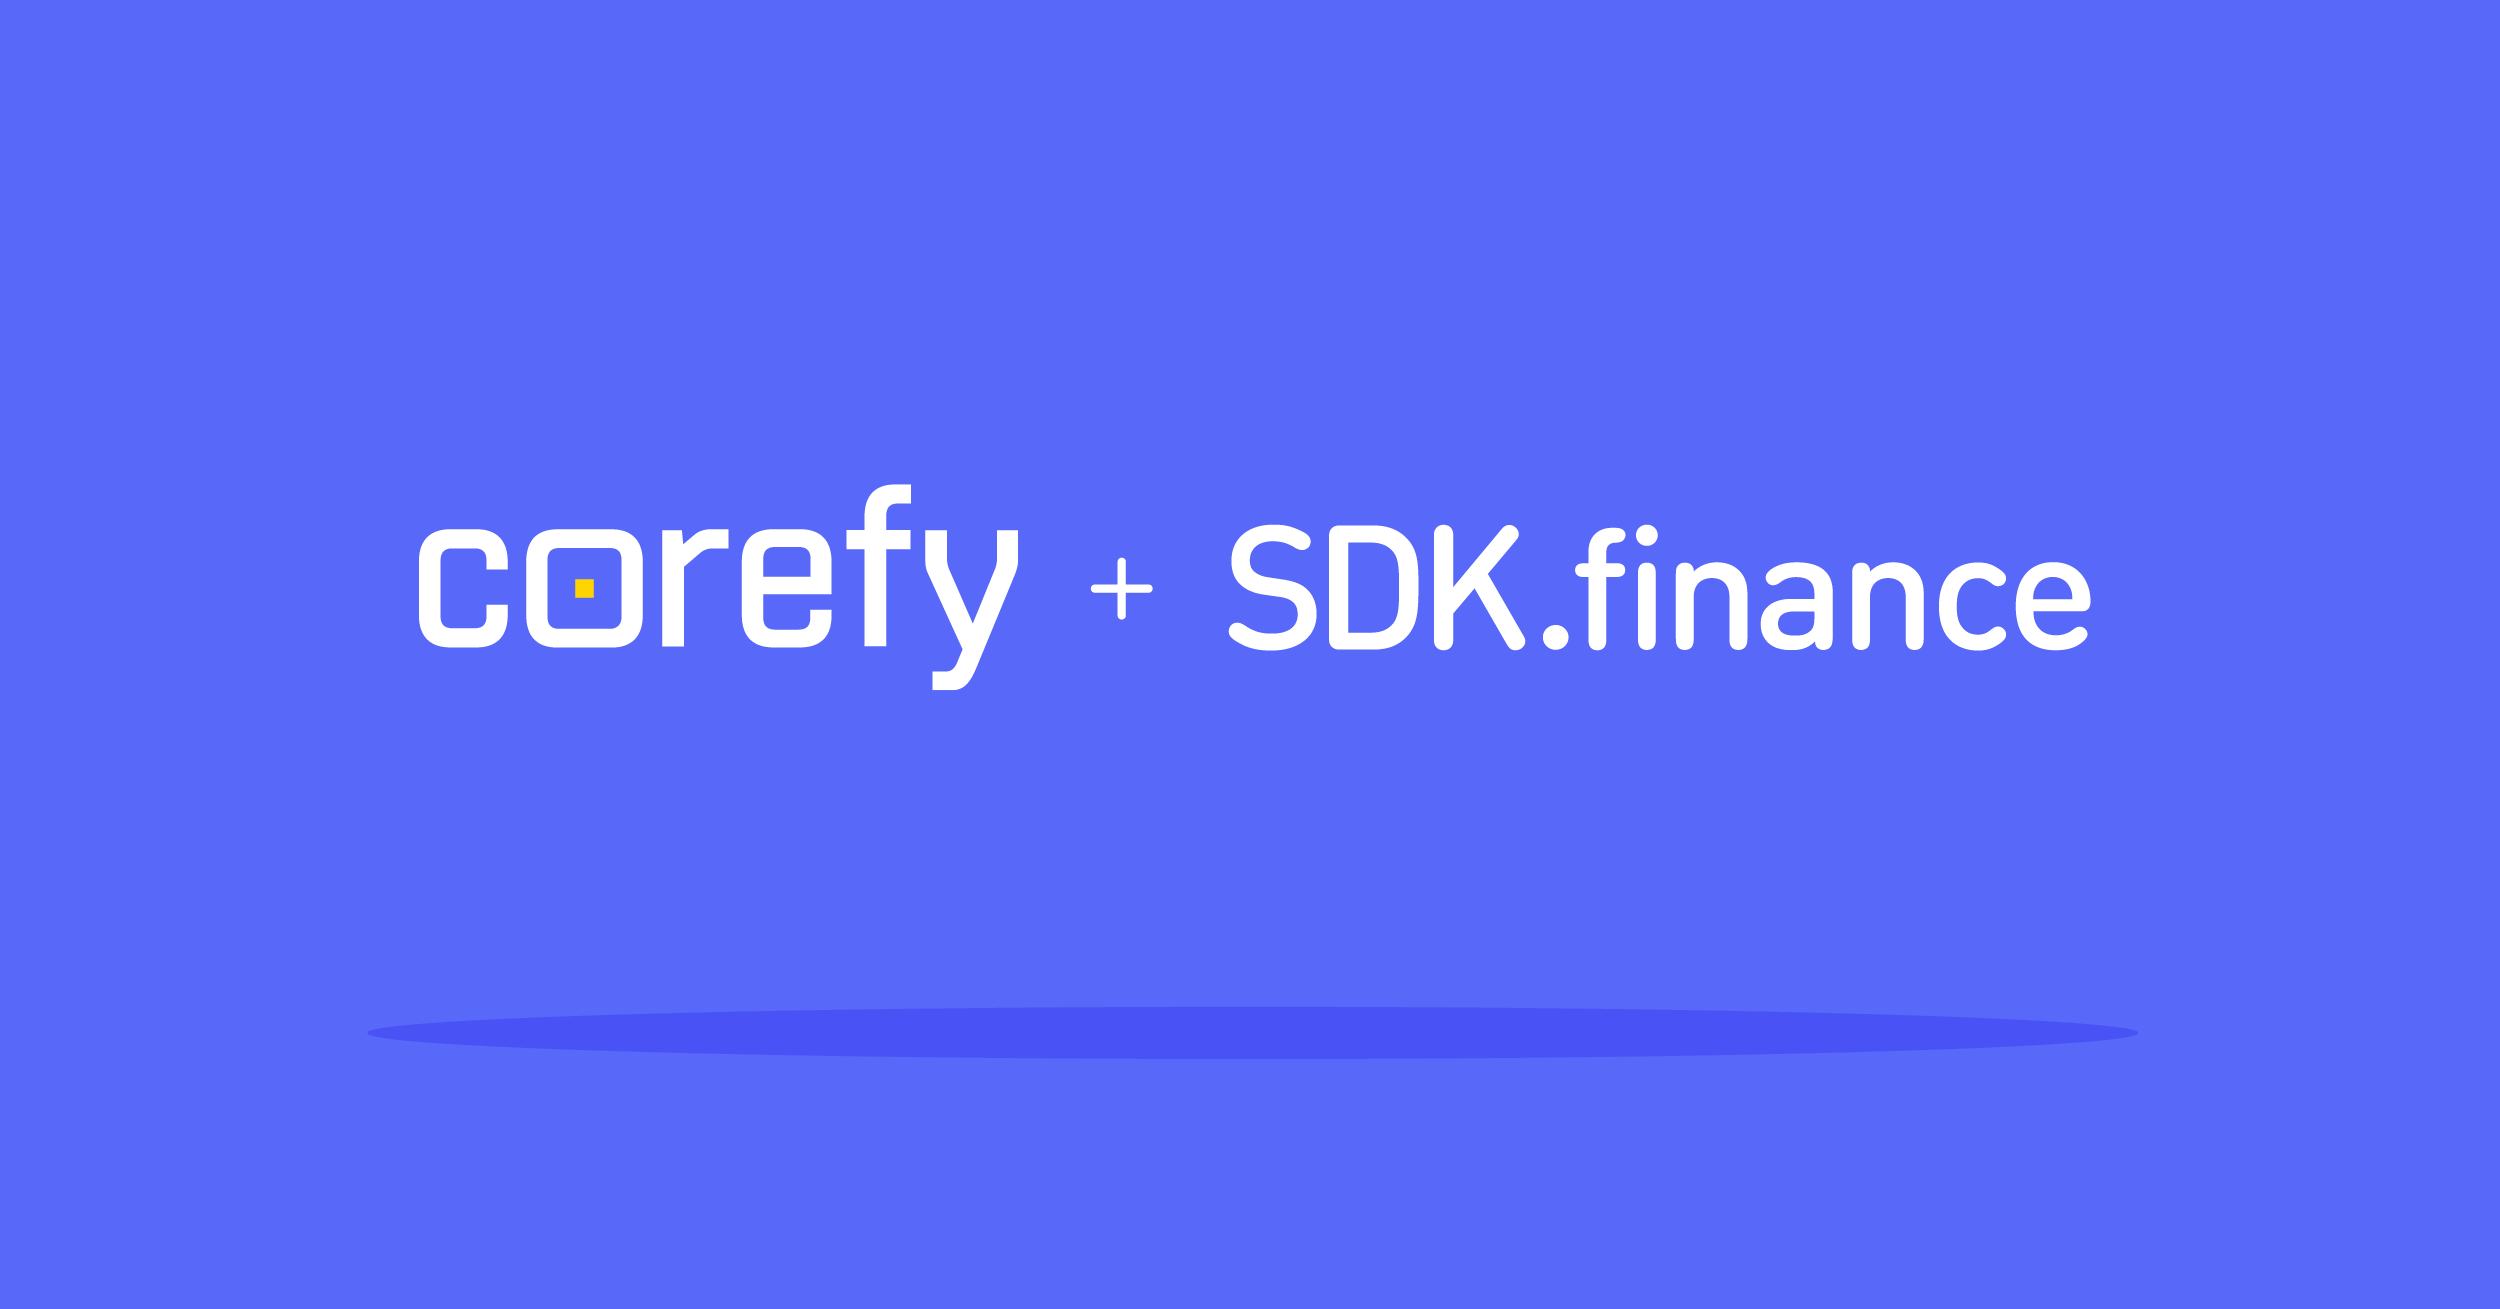 Corefy partnered up with SDK.finance